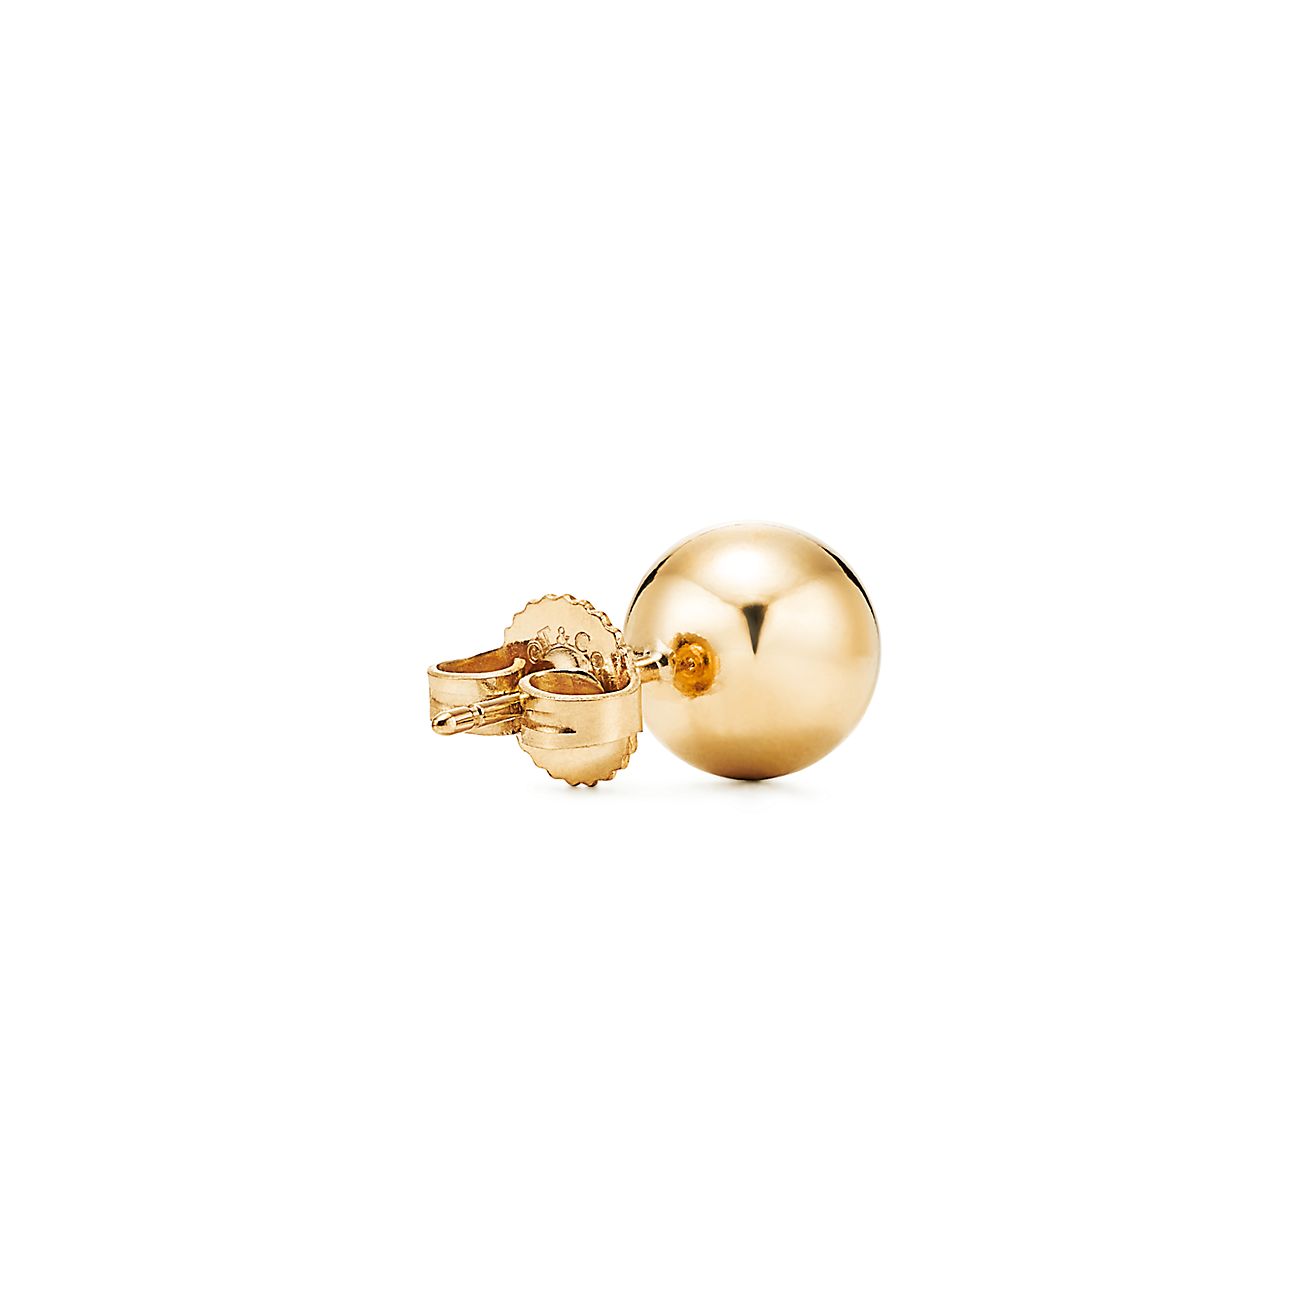 tiffany ball earrings gold